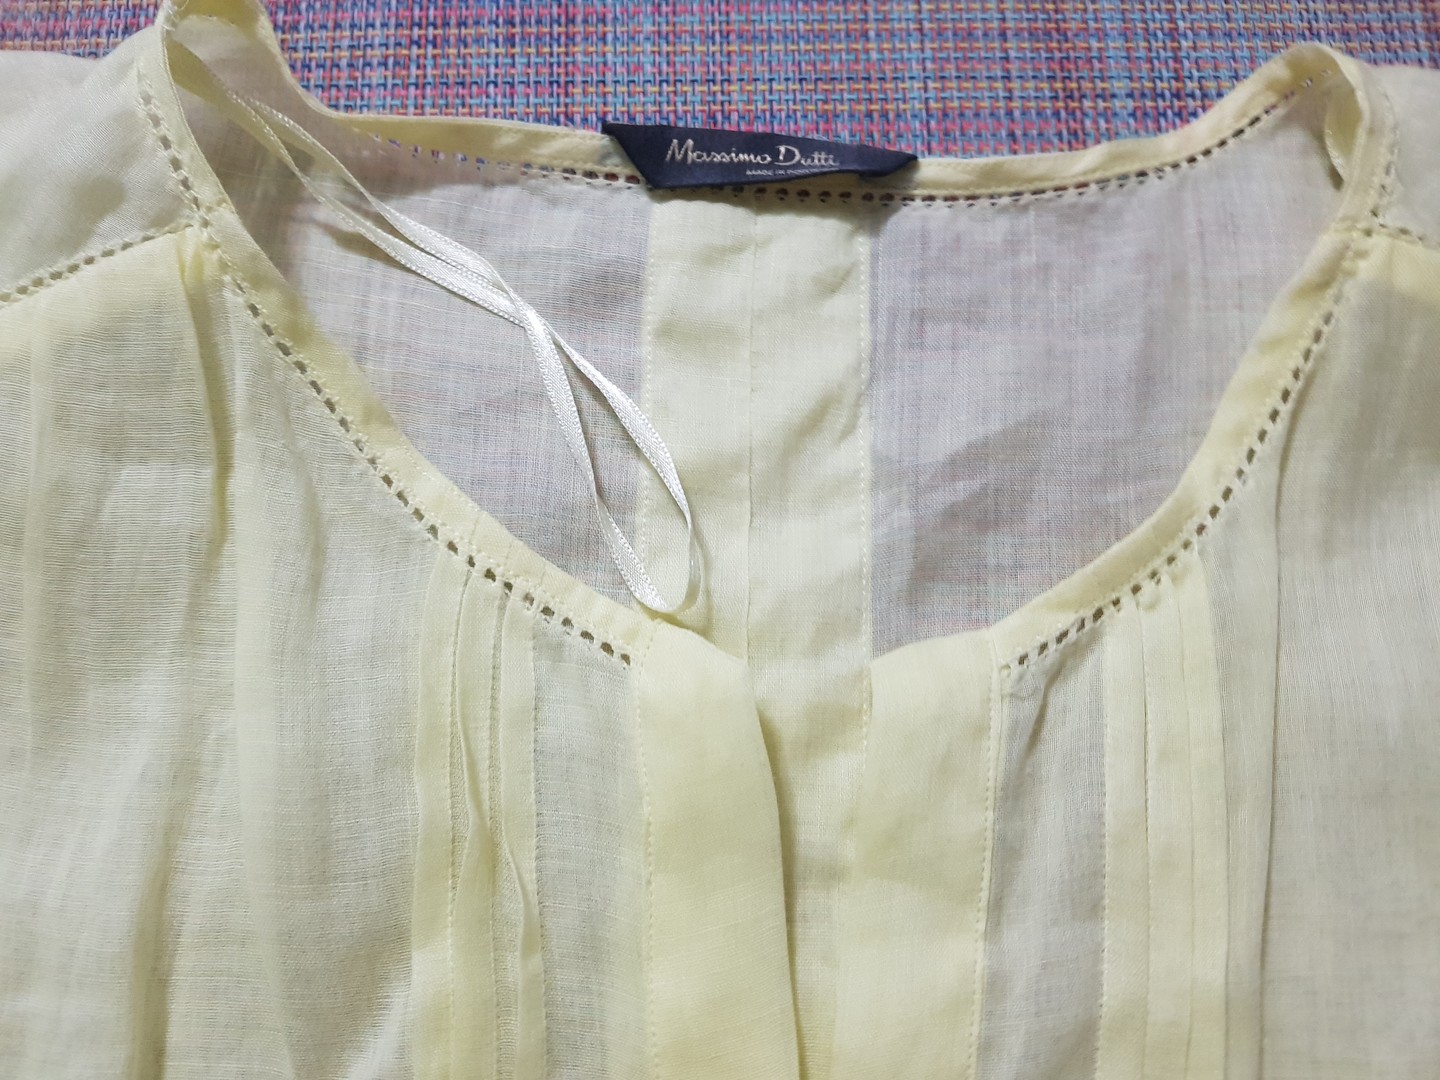 ropa para mujer - Delicada blusa sin mangas, color amarillo tierno, Massimo Dutti de España. 1